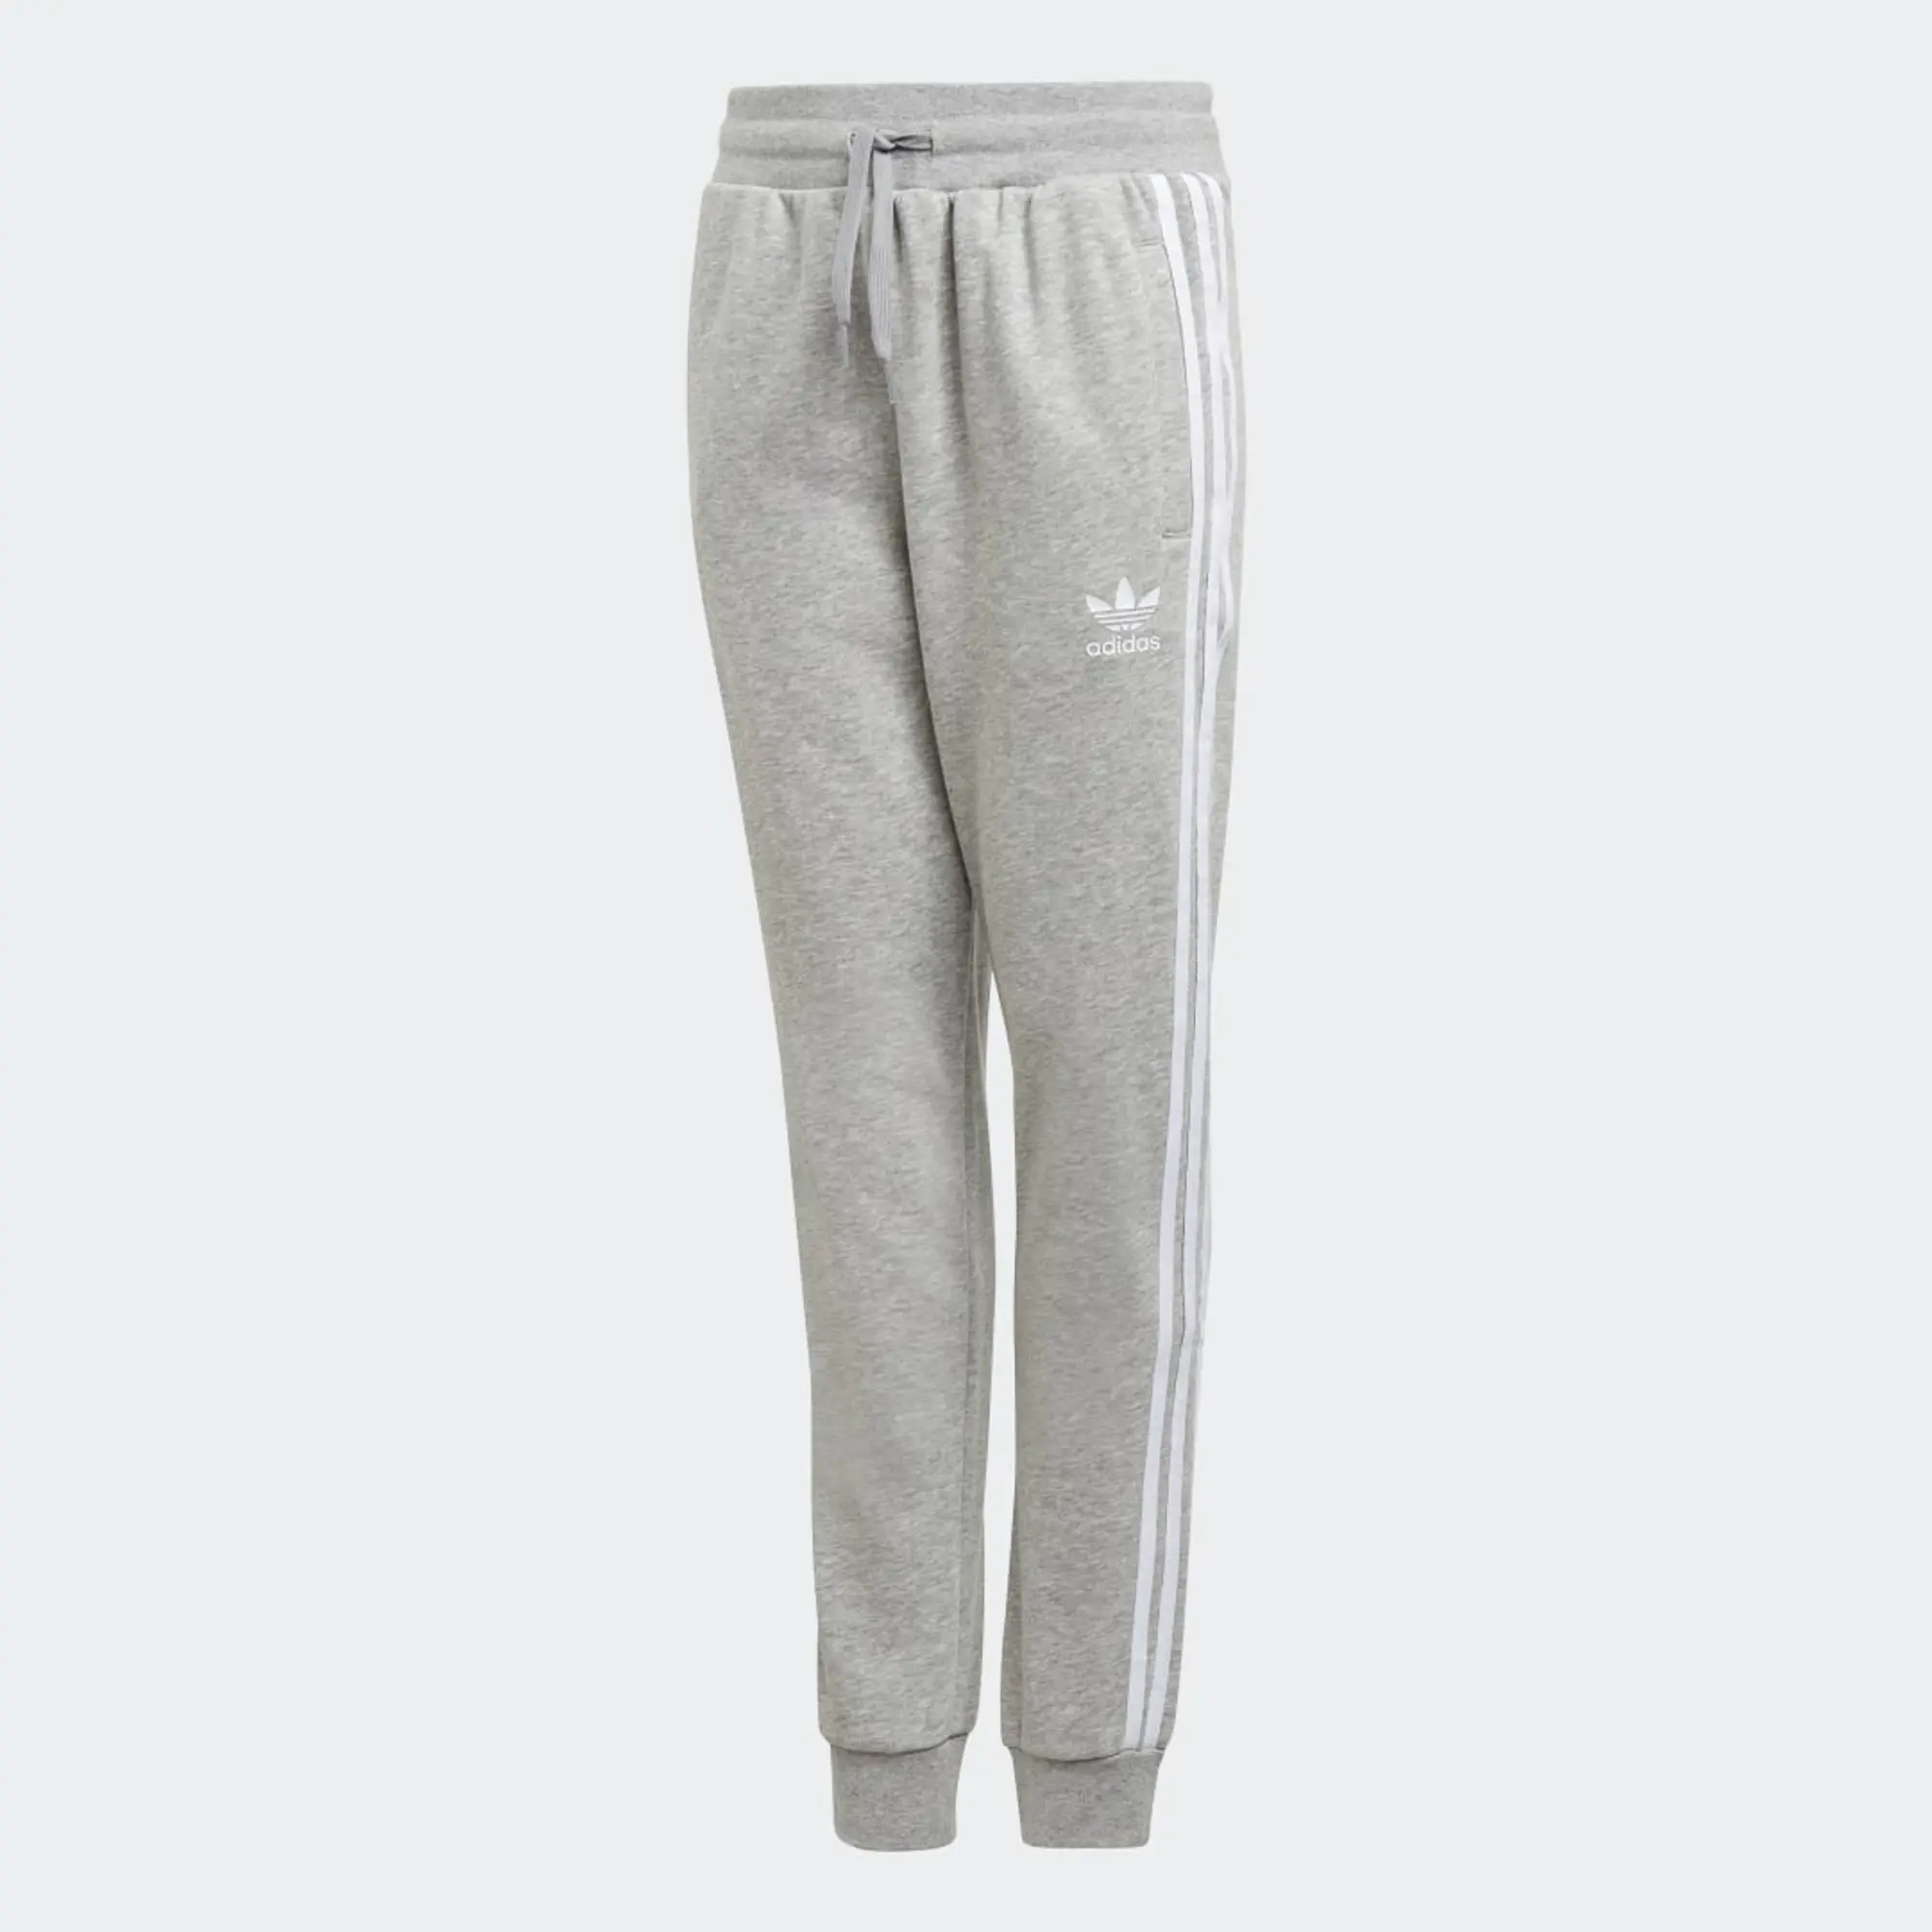 Boys, adidas Originals Children's Trefoil Pants - Grey Heather, Grey Heather